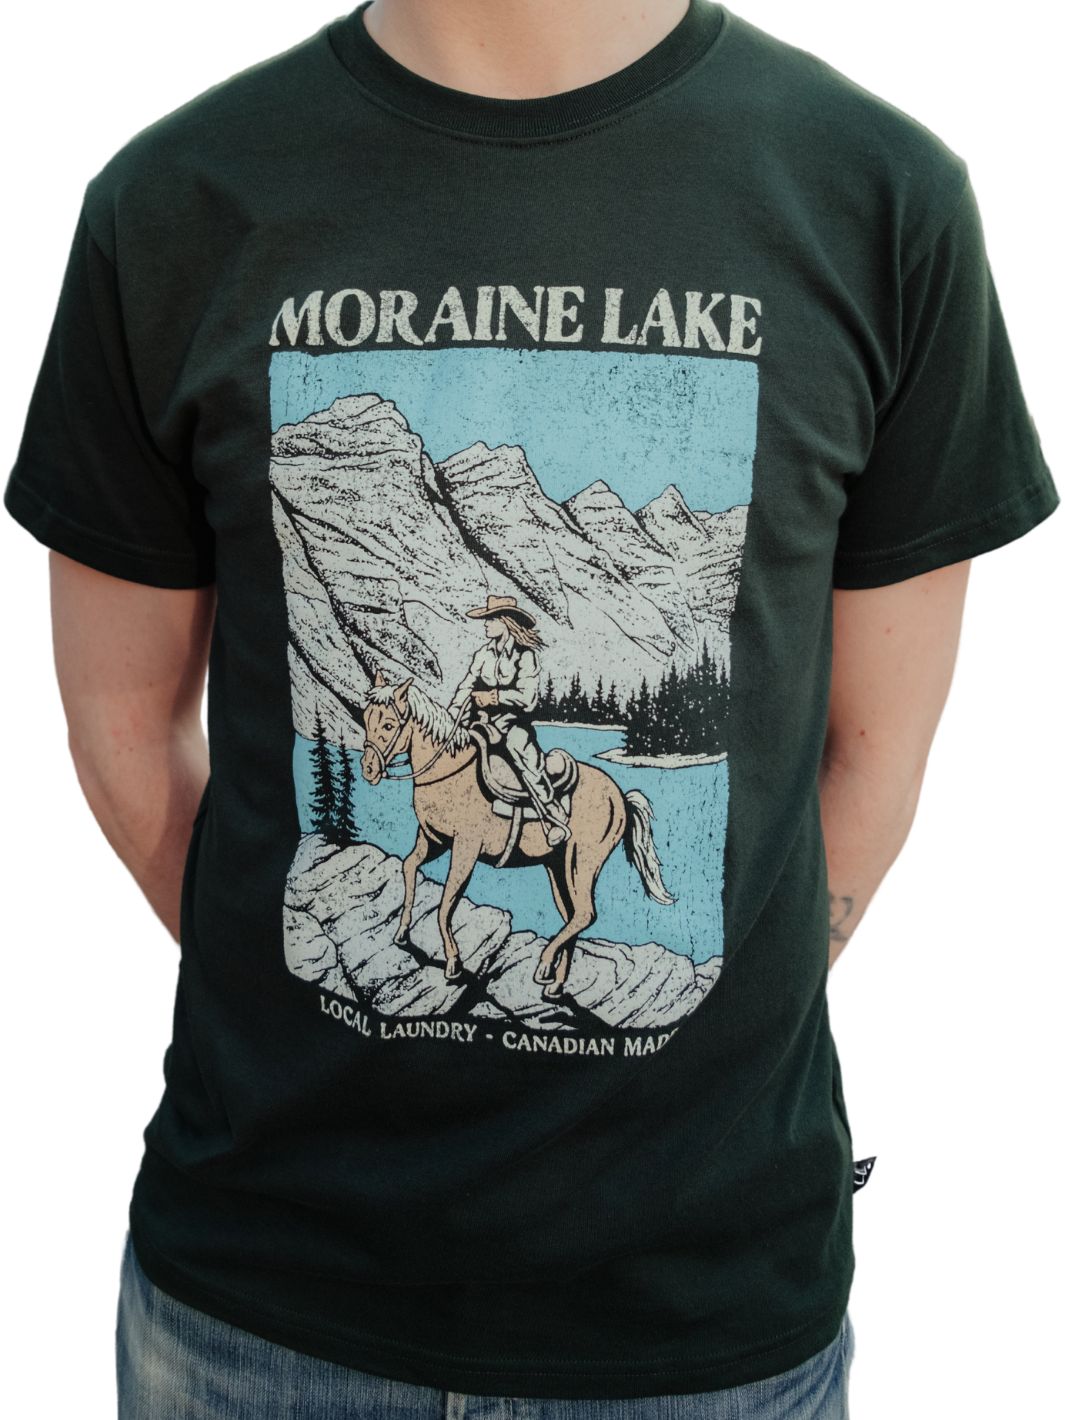 Moraine Lake Tee - Local Laundry